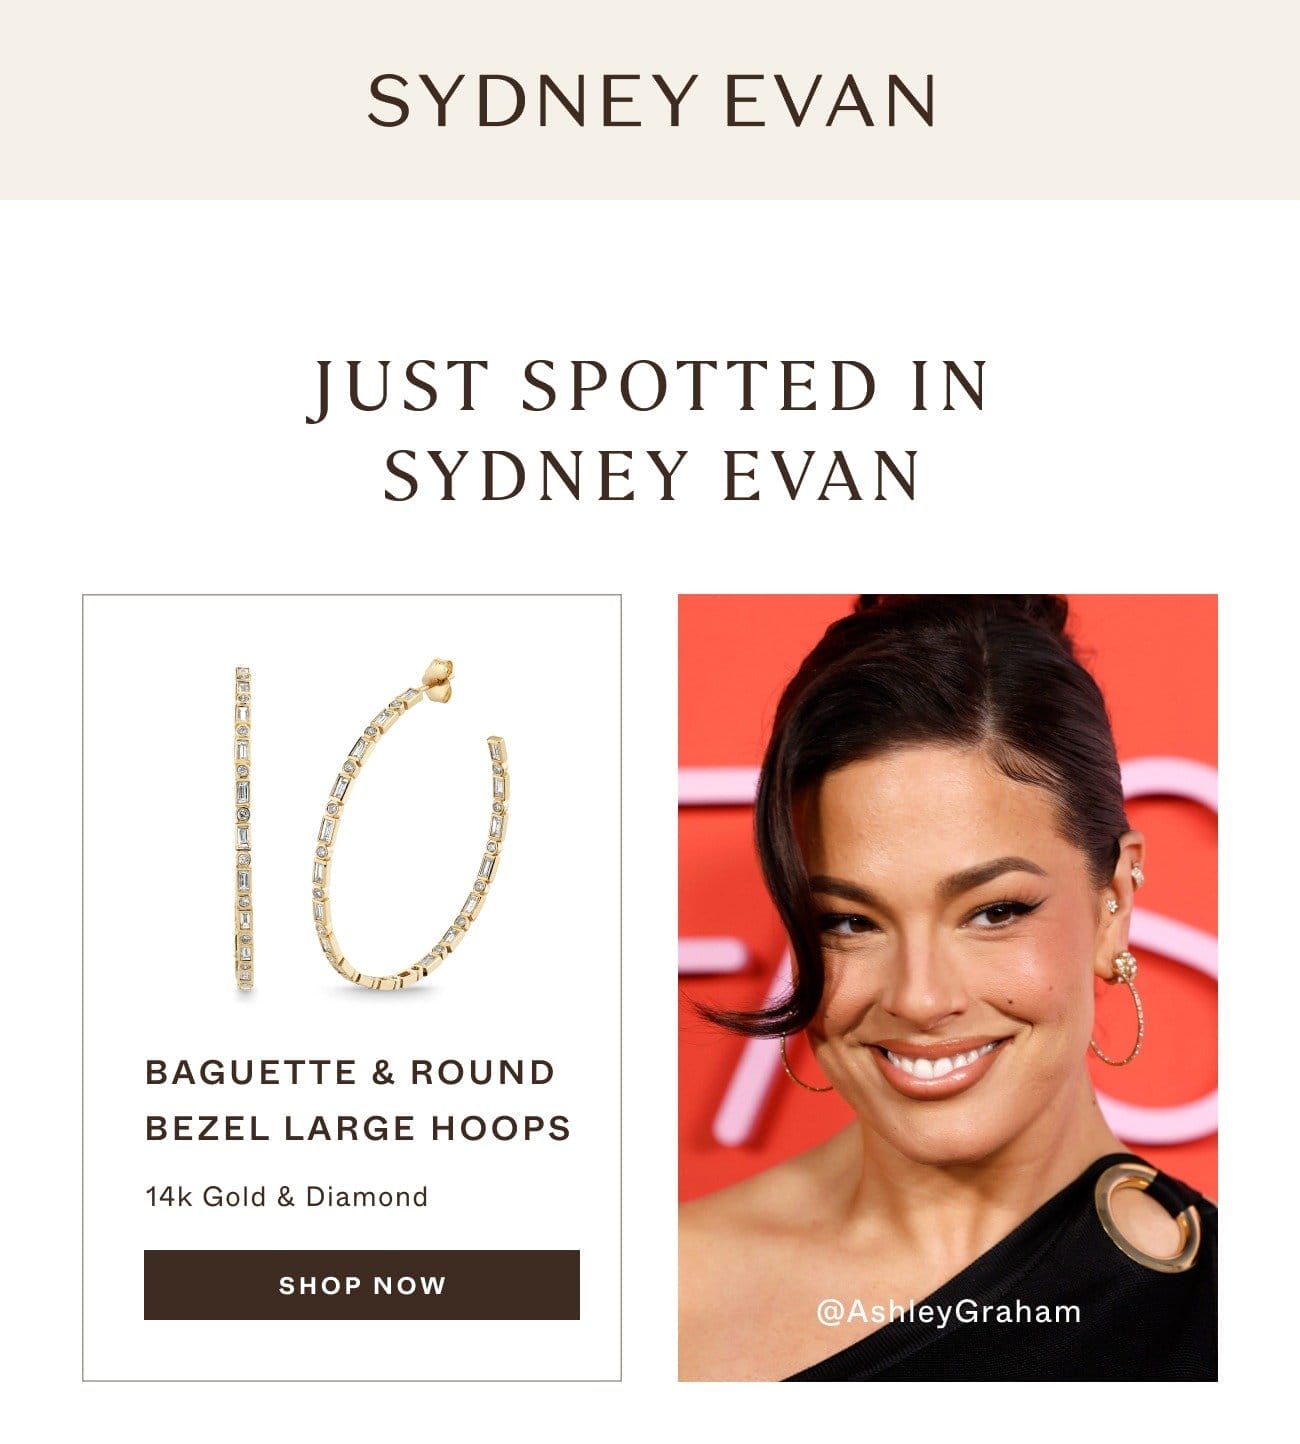 Sydney Evan Baguette & Round Bezel Large Hoop Earrings - Dakota Fanning